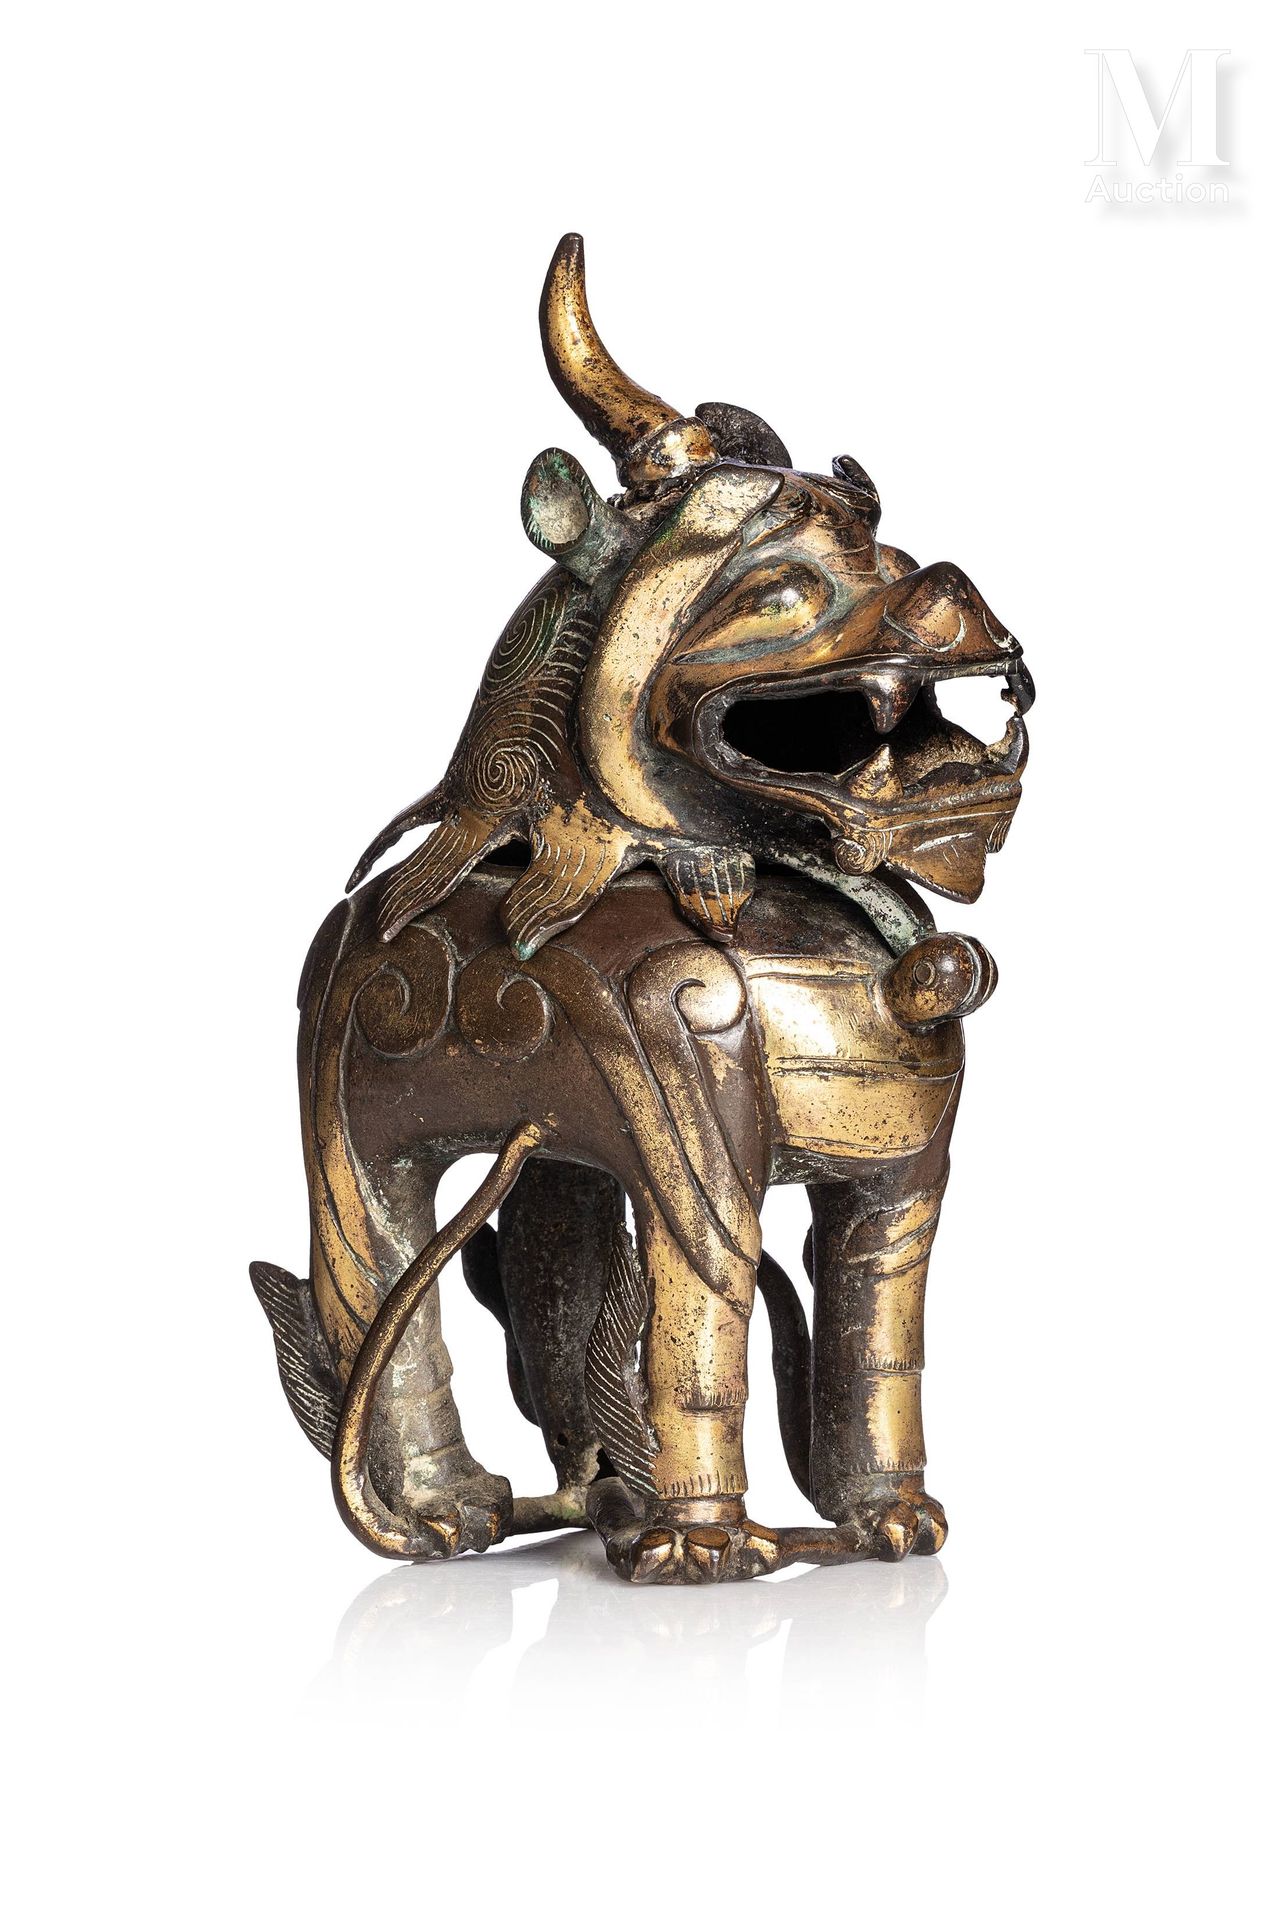 CHINE, XVIIe siècle 
罕见的奇美拉形式的青铜香炉，其活动的头部可滑动以放置香。它在棕色古铜色的背景上有金色的亮点。 









高度&hellip;